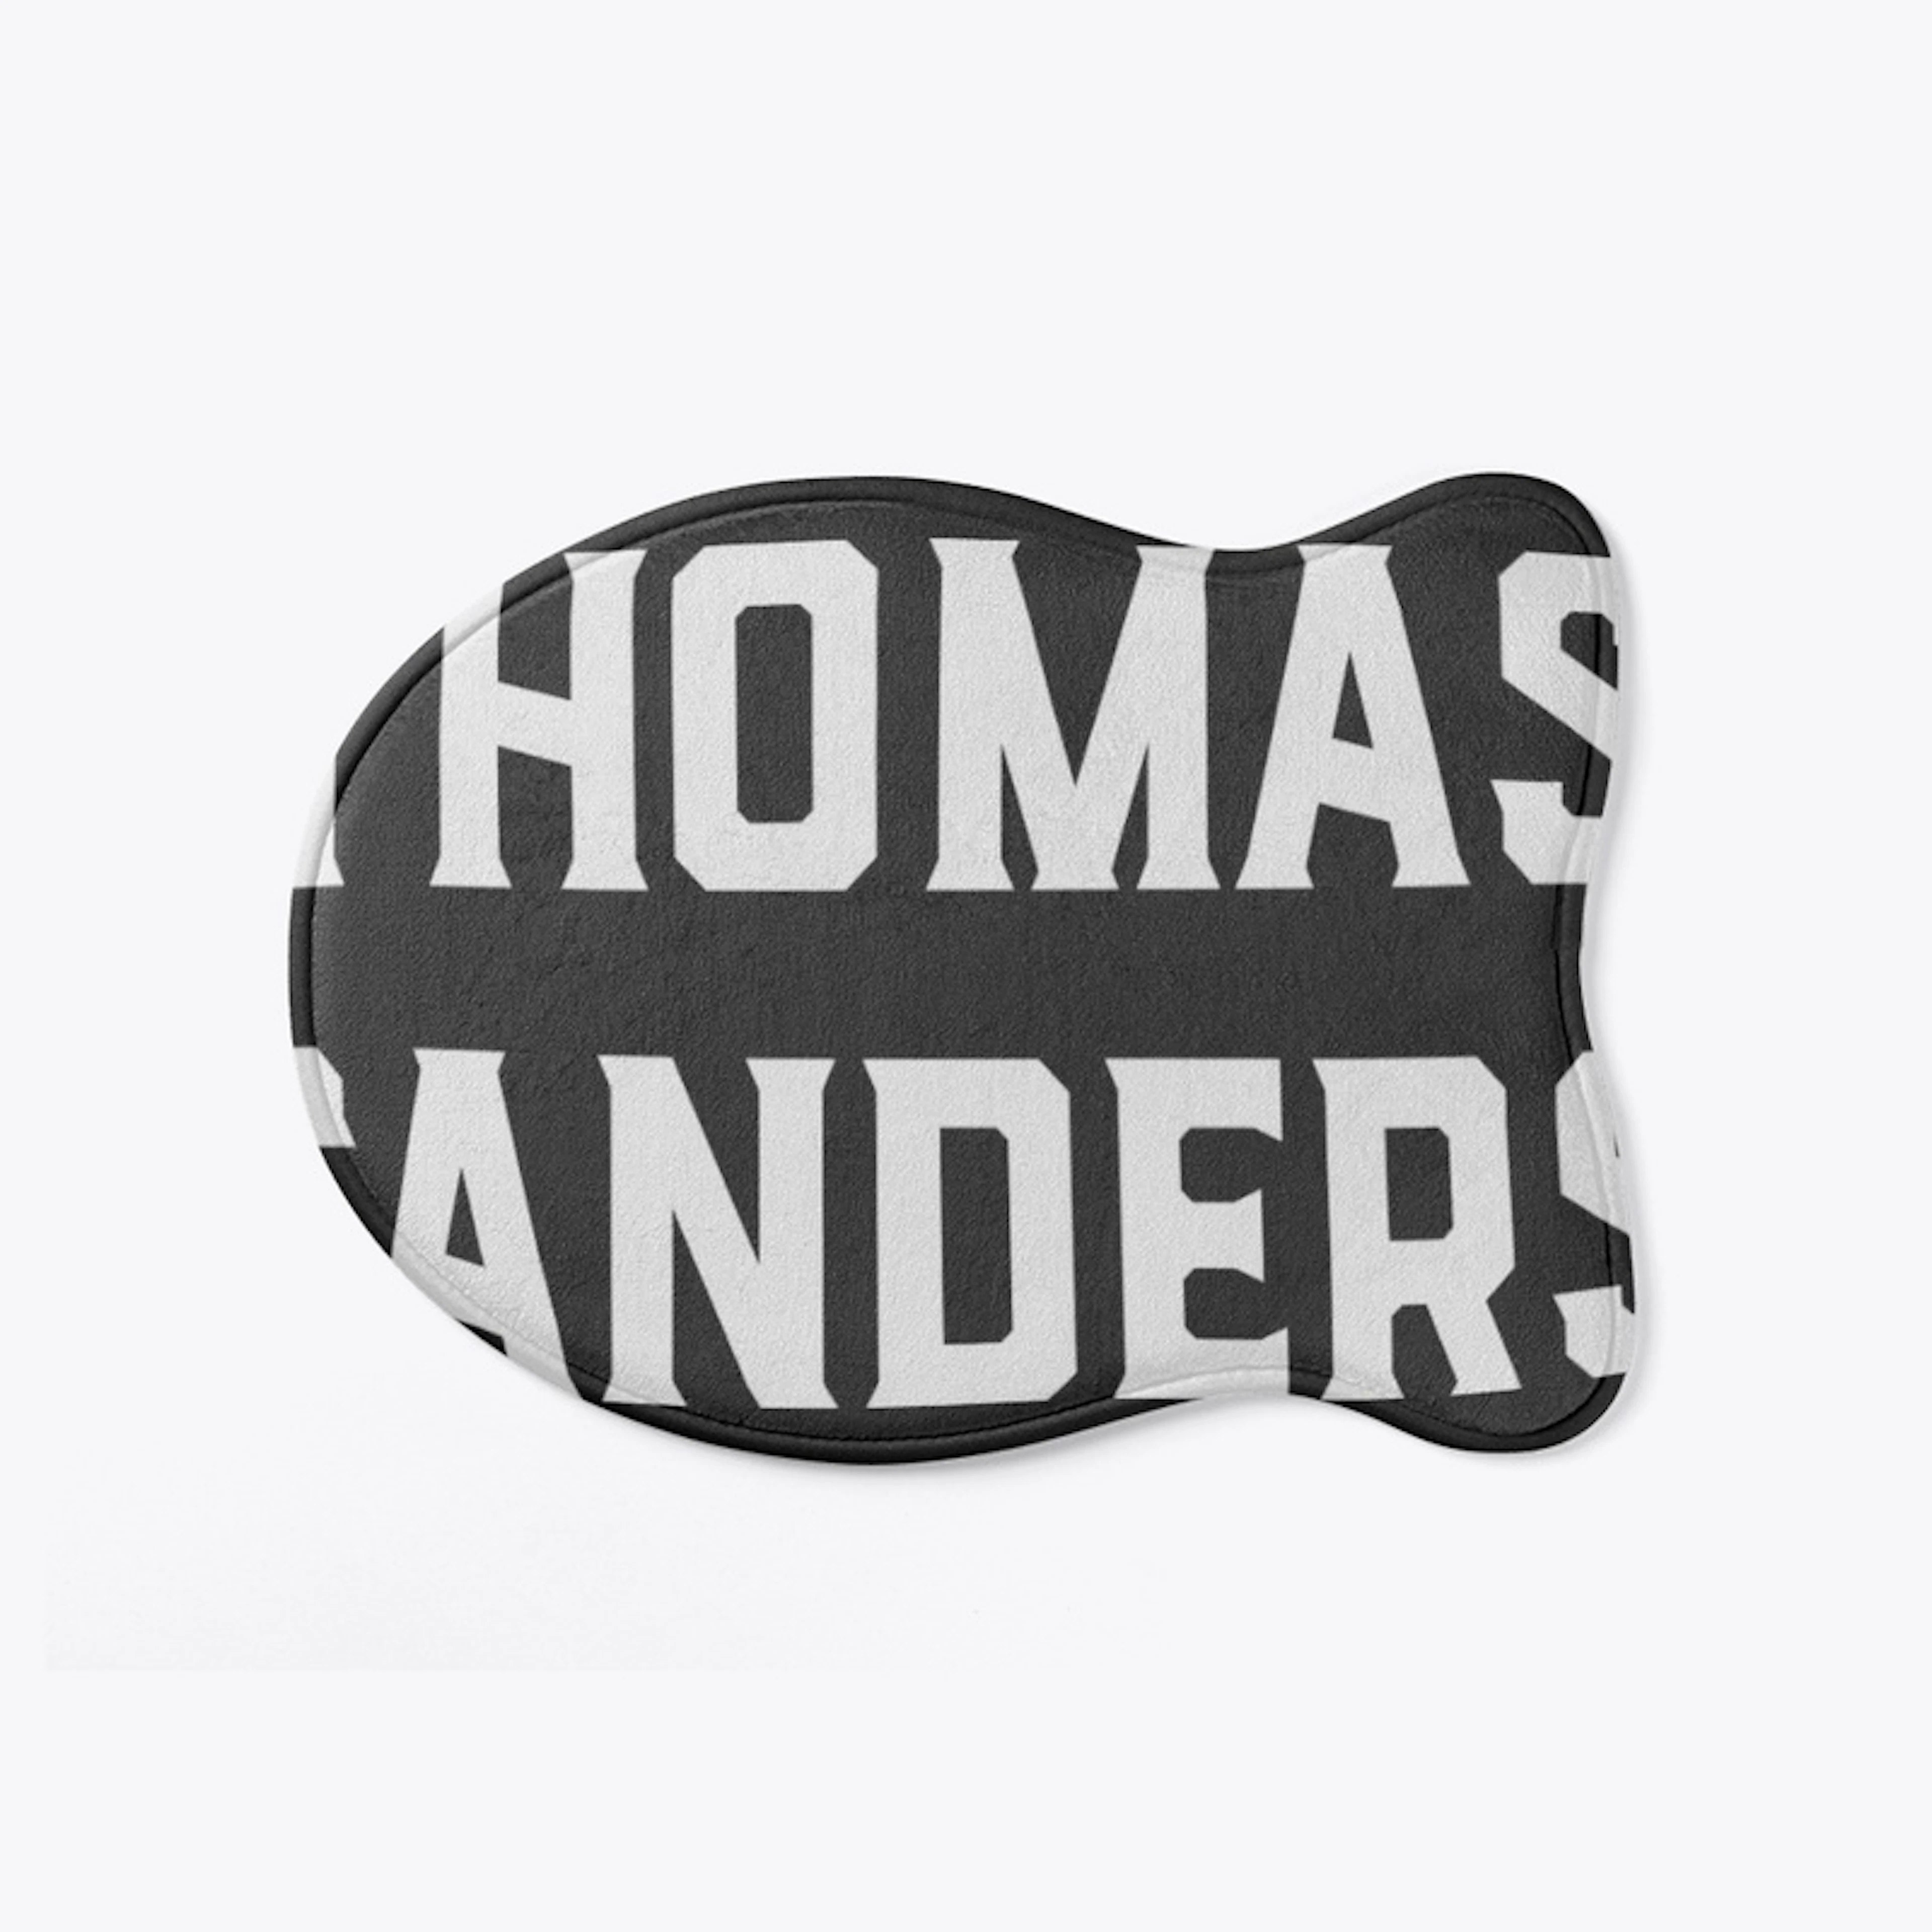 Thomas Sanders Merch Logo